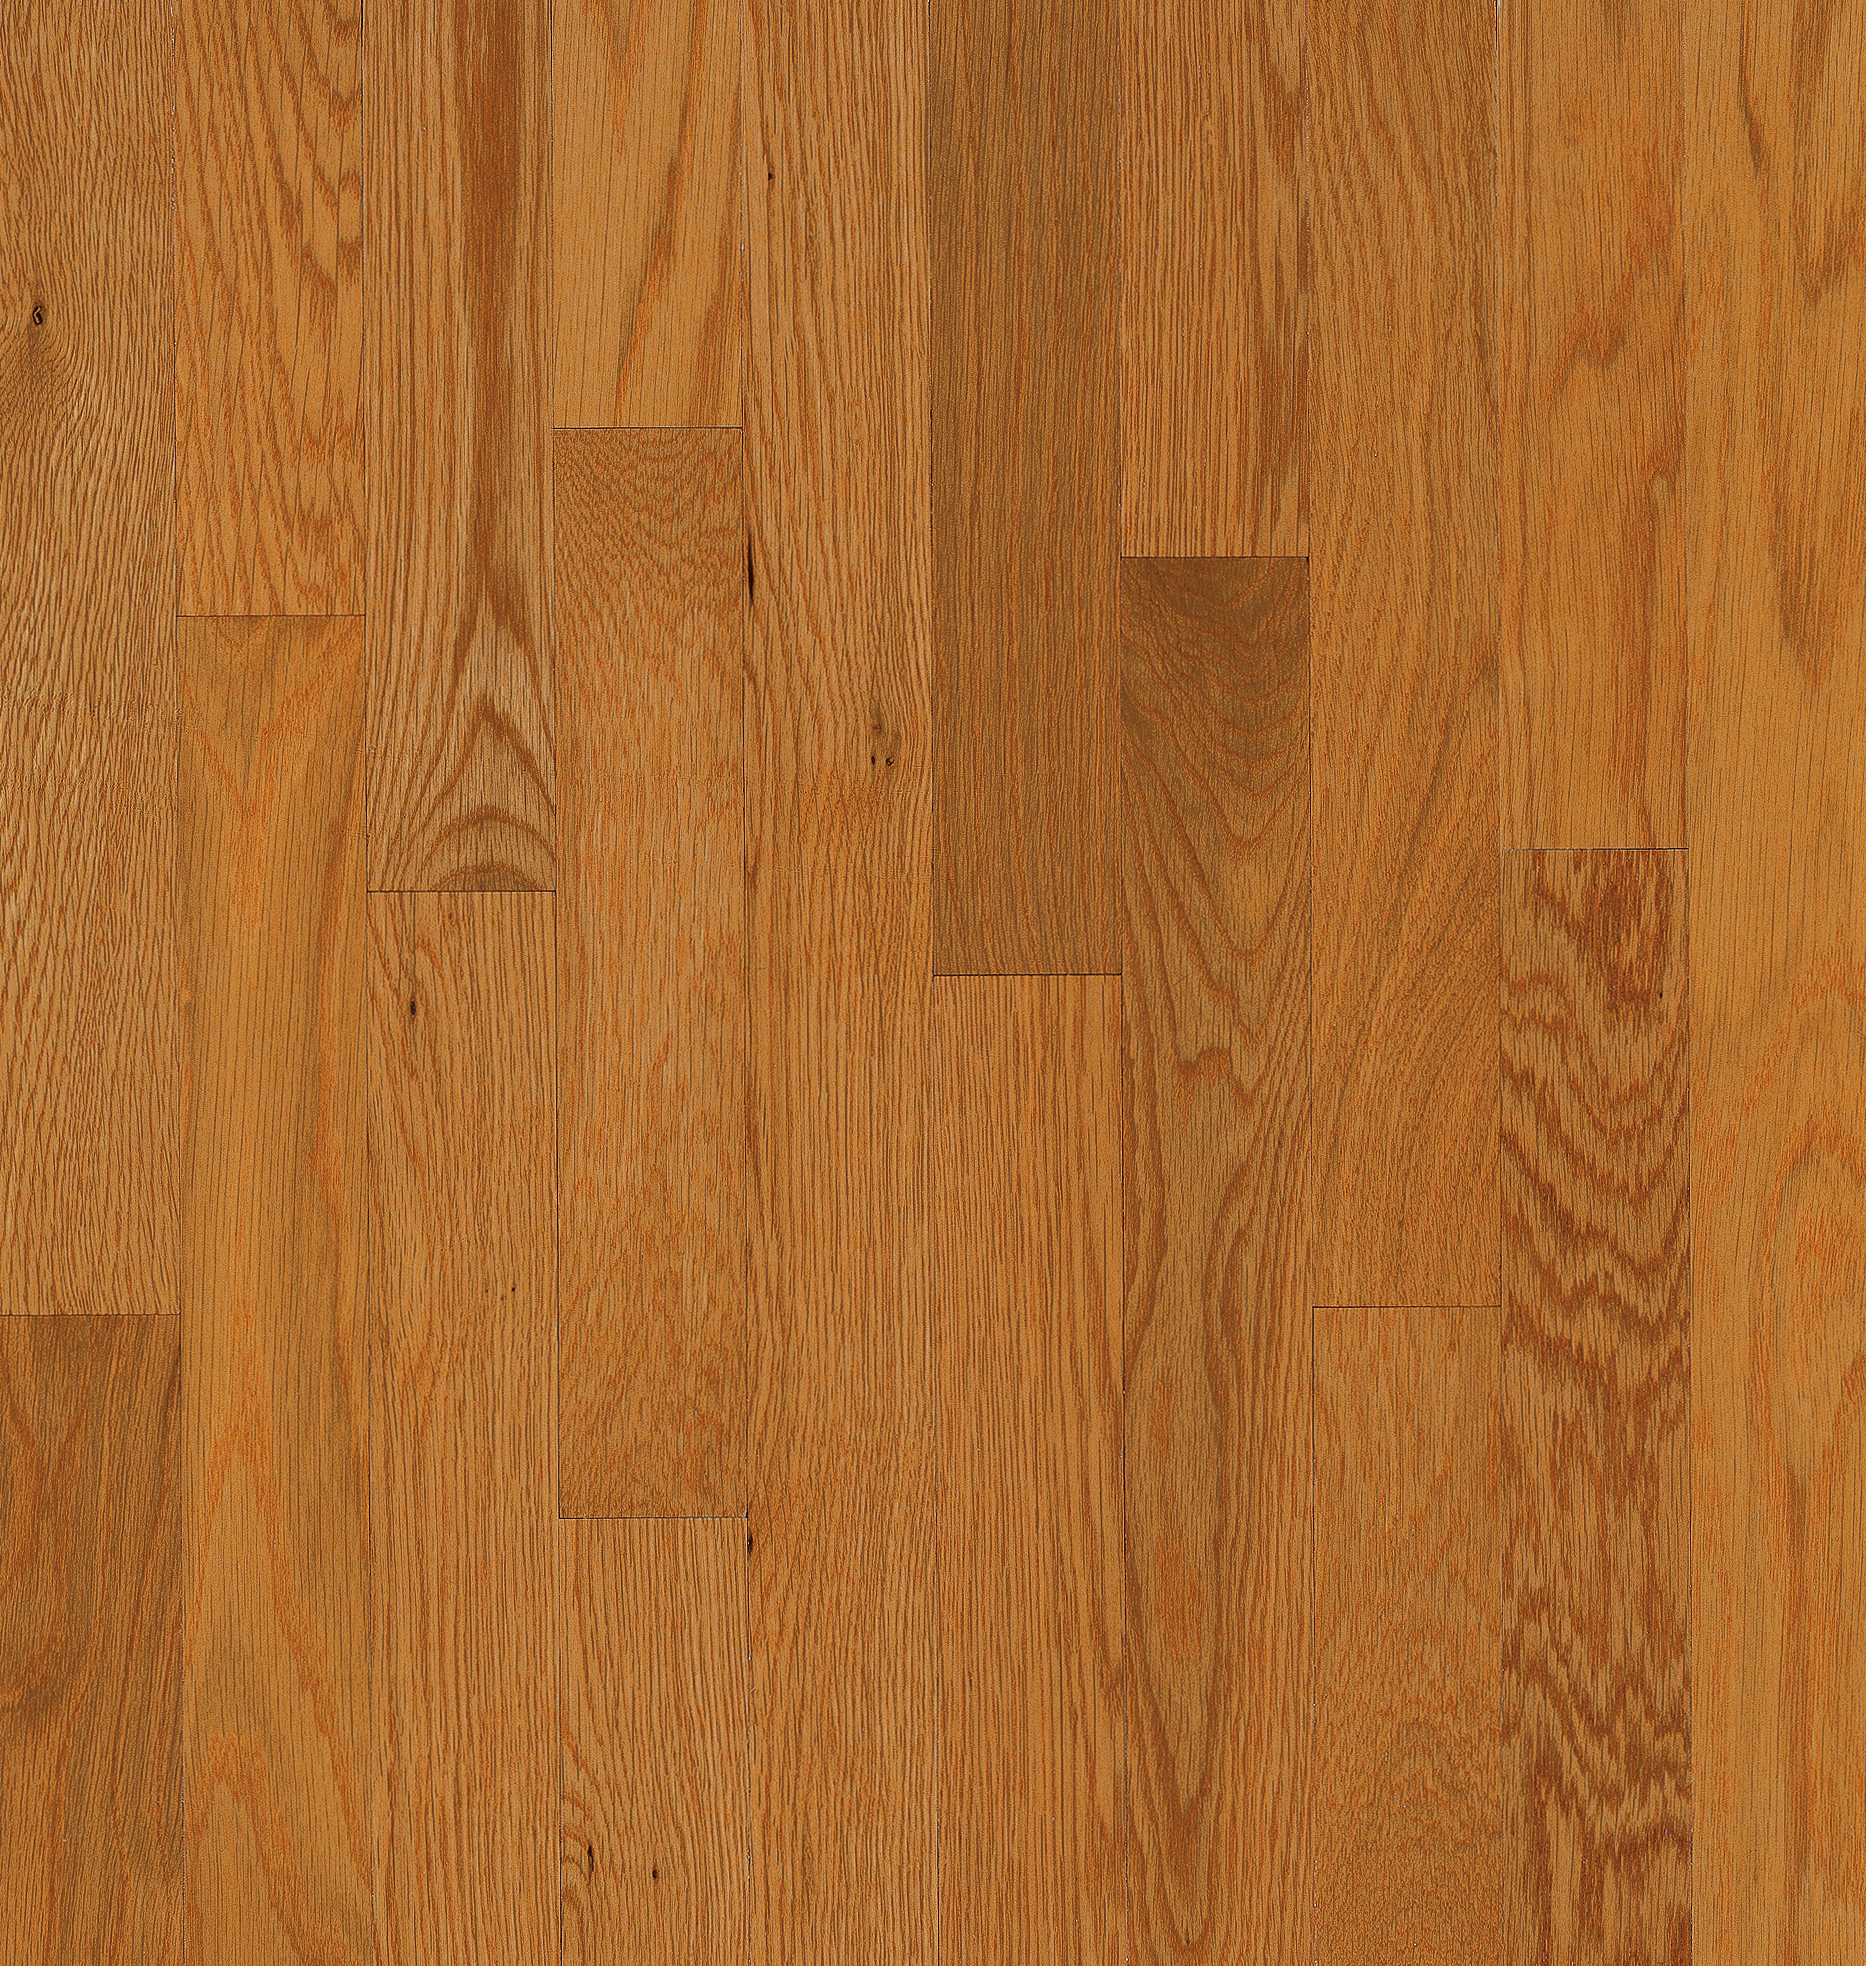 Oak Solid Hardwood Cb259, 2 1 4 Inch Oak Hardwood Flooring